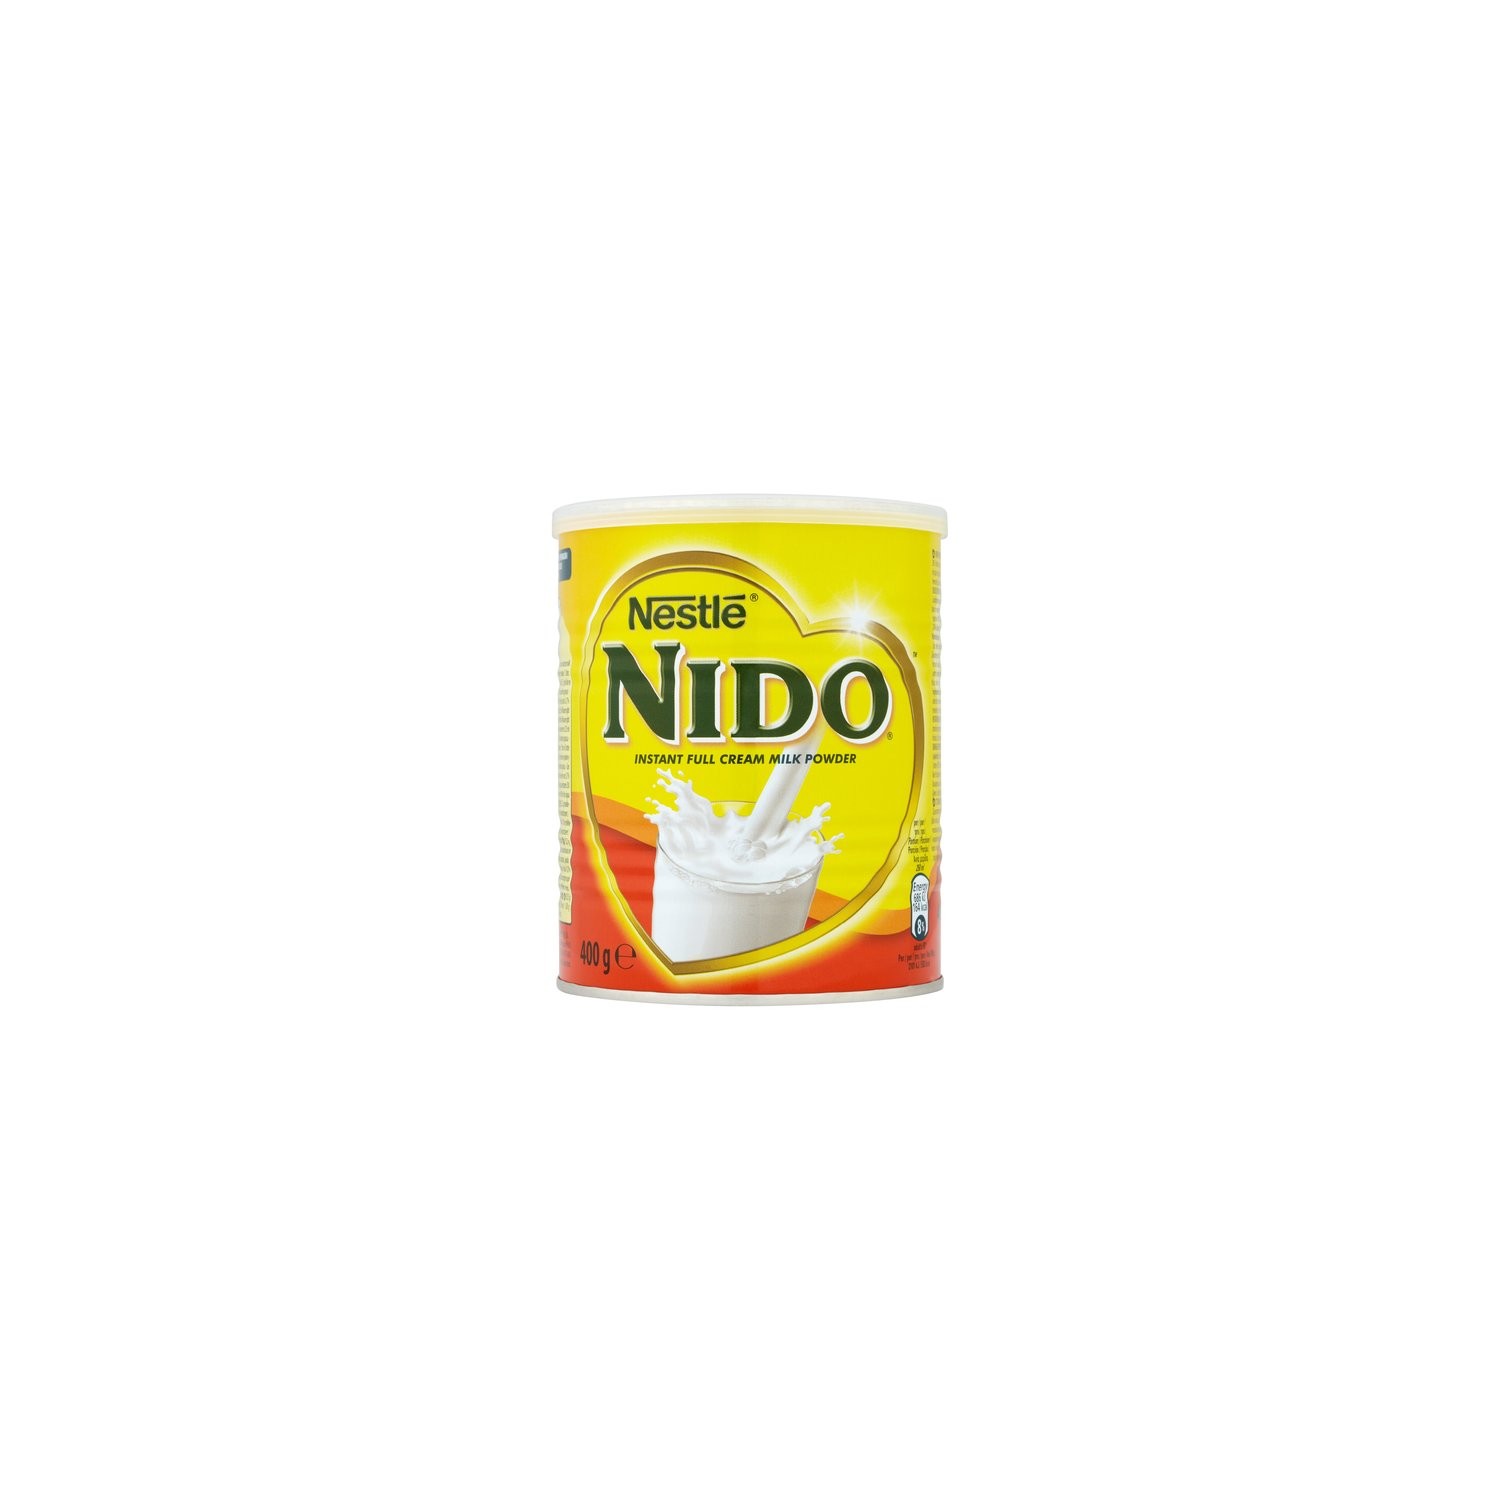 Nestle 400g Nido Instant Full Cream Milk Powder